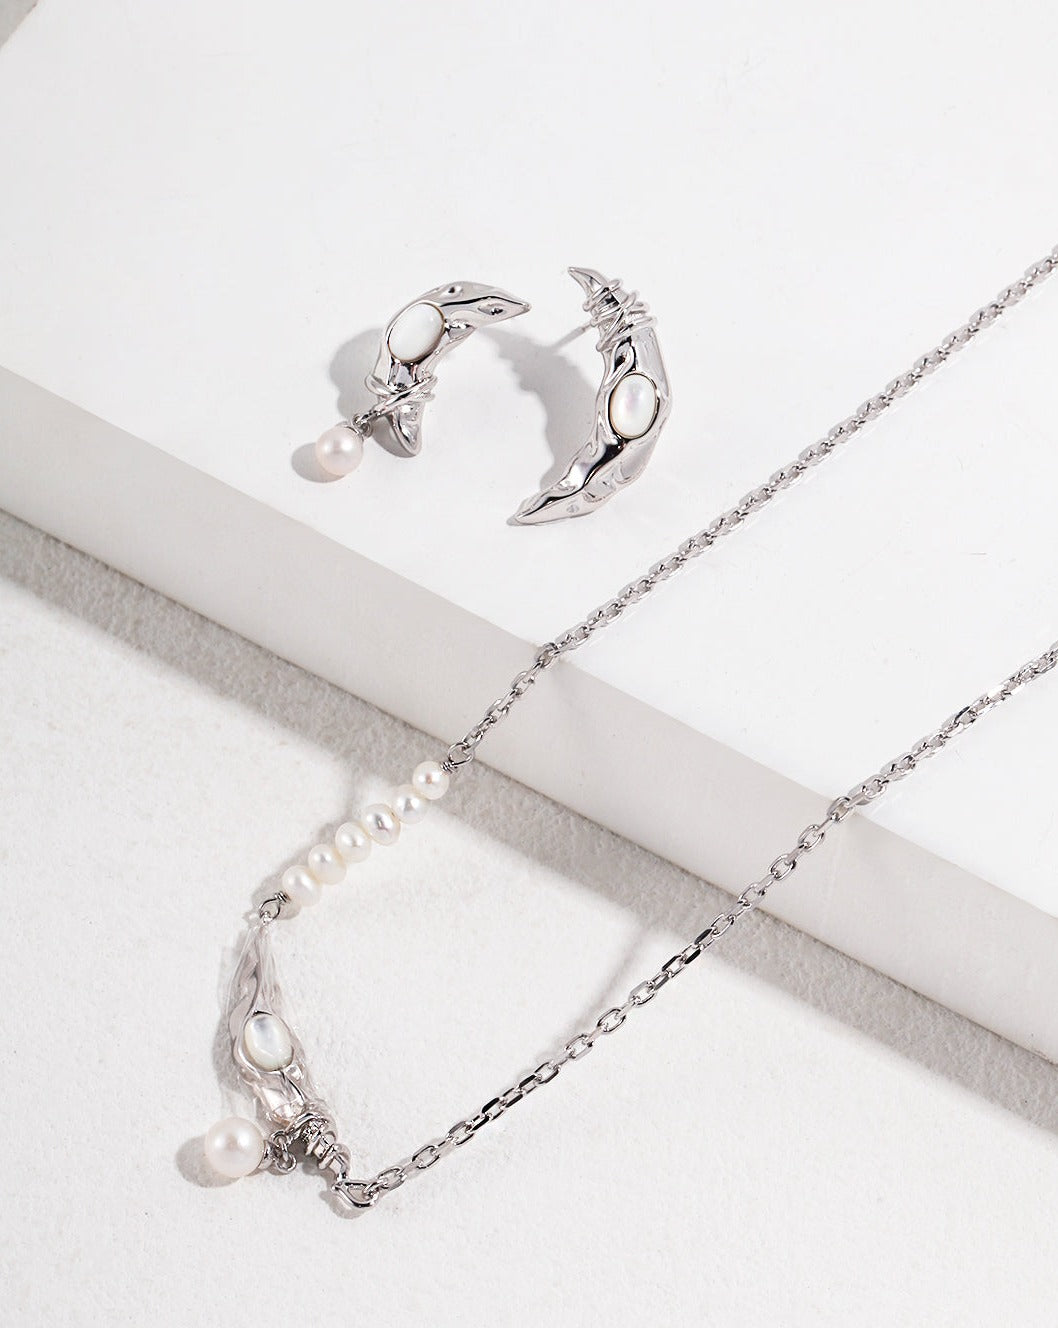 fashion-jewelry-minimalist-jewelry-design-jewelry-statement-necklace-pearl-earring-bracelet-rings-gold-coated-silver-bijoux-retro-gold-jewelry-moon-shape-pearl-lazurite-earrings-necklace